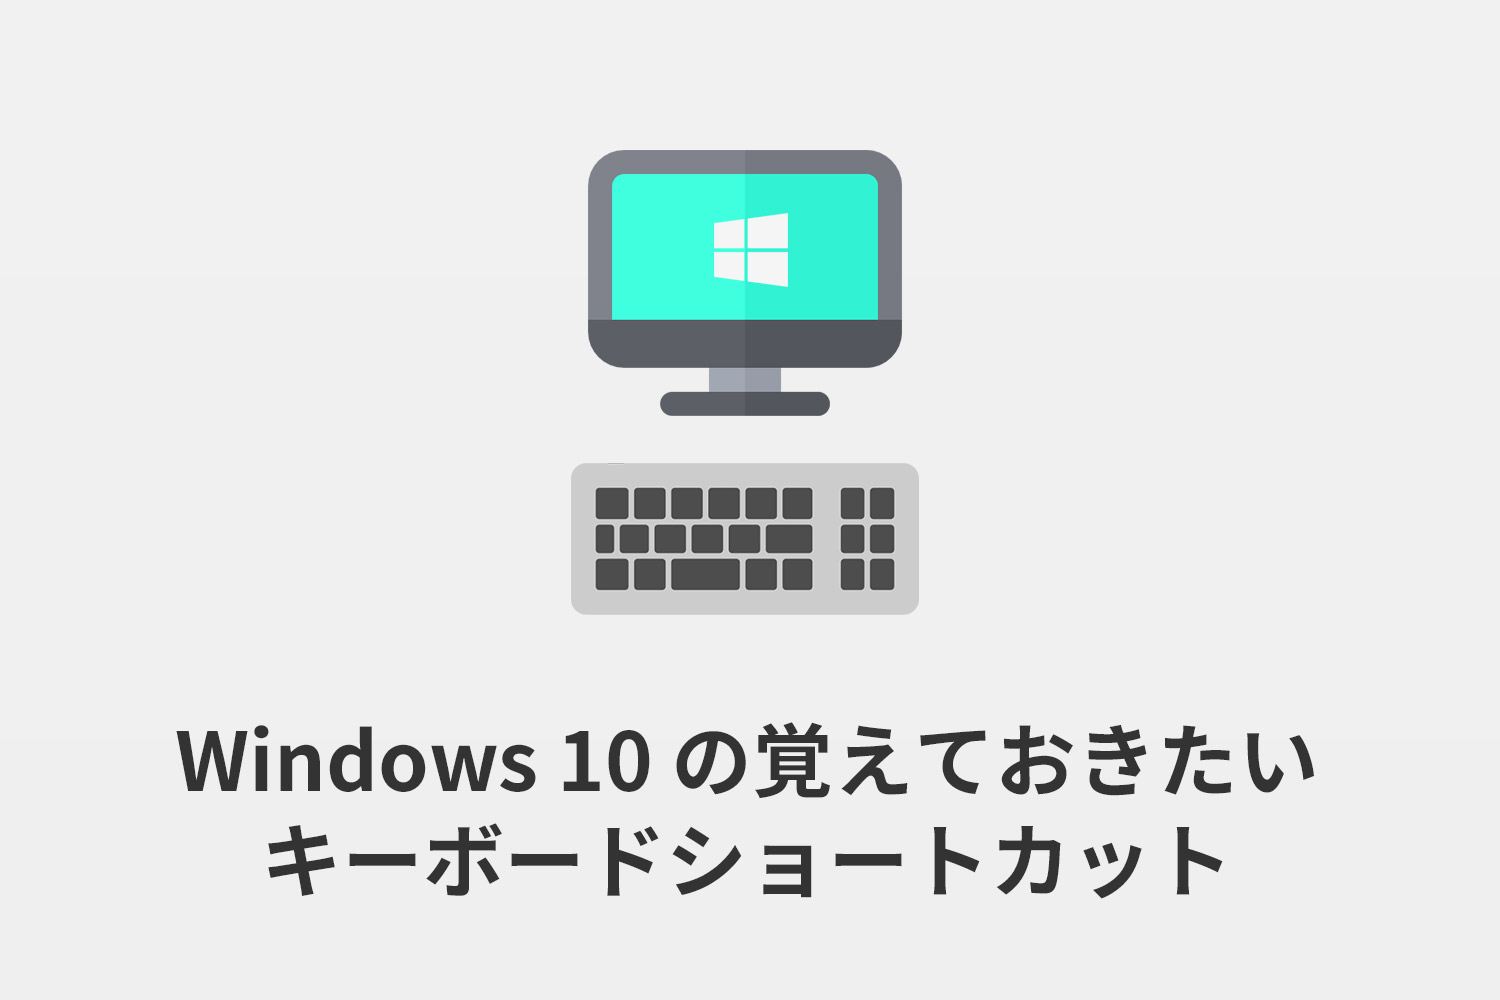 Windows 10で覚えておきたいキーボードショートカット10選